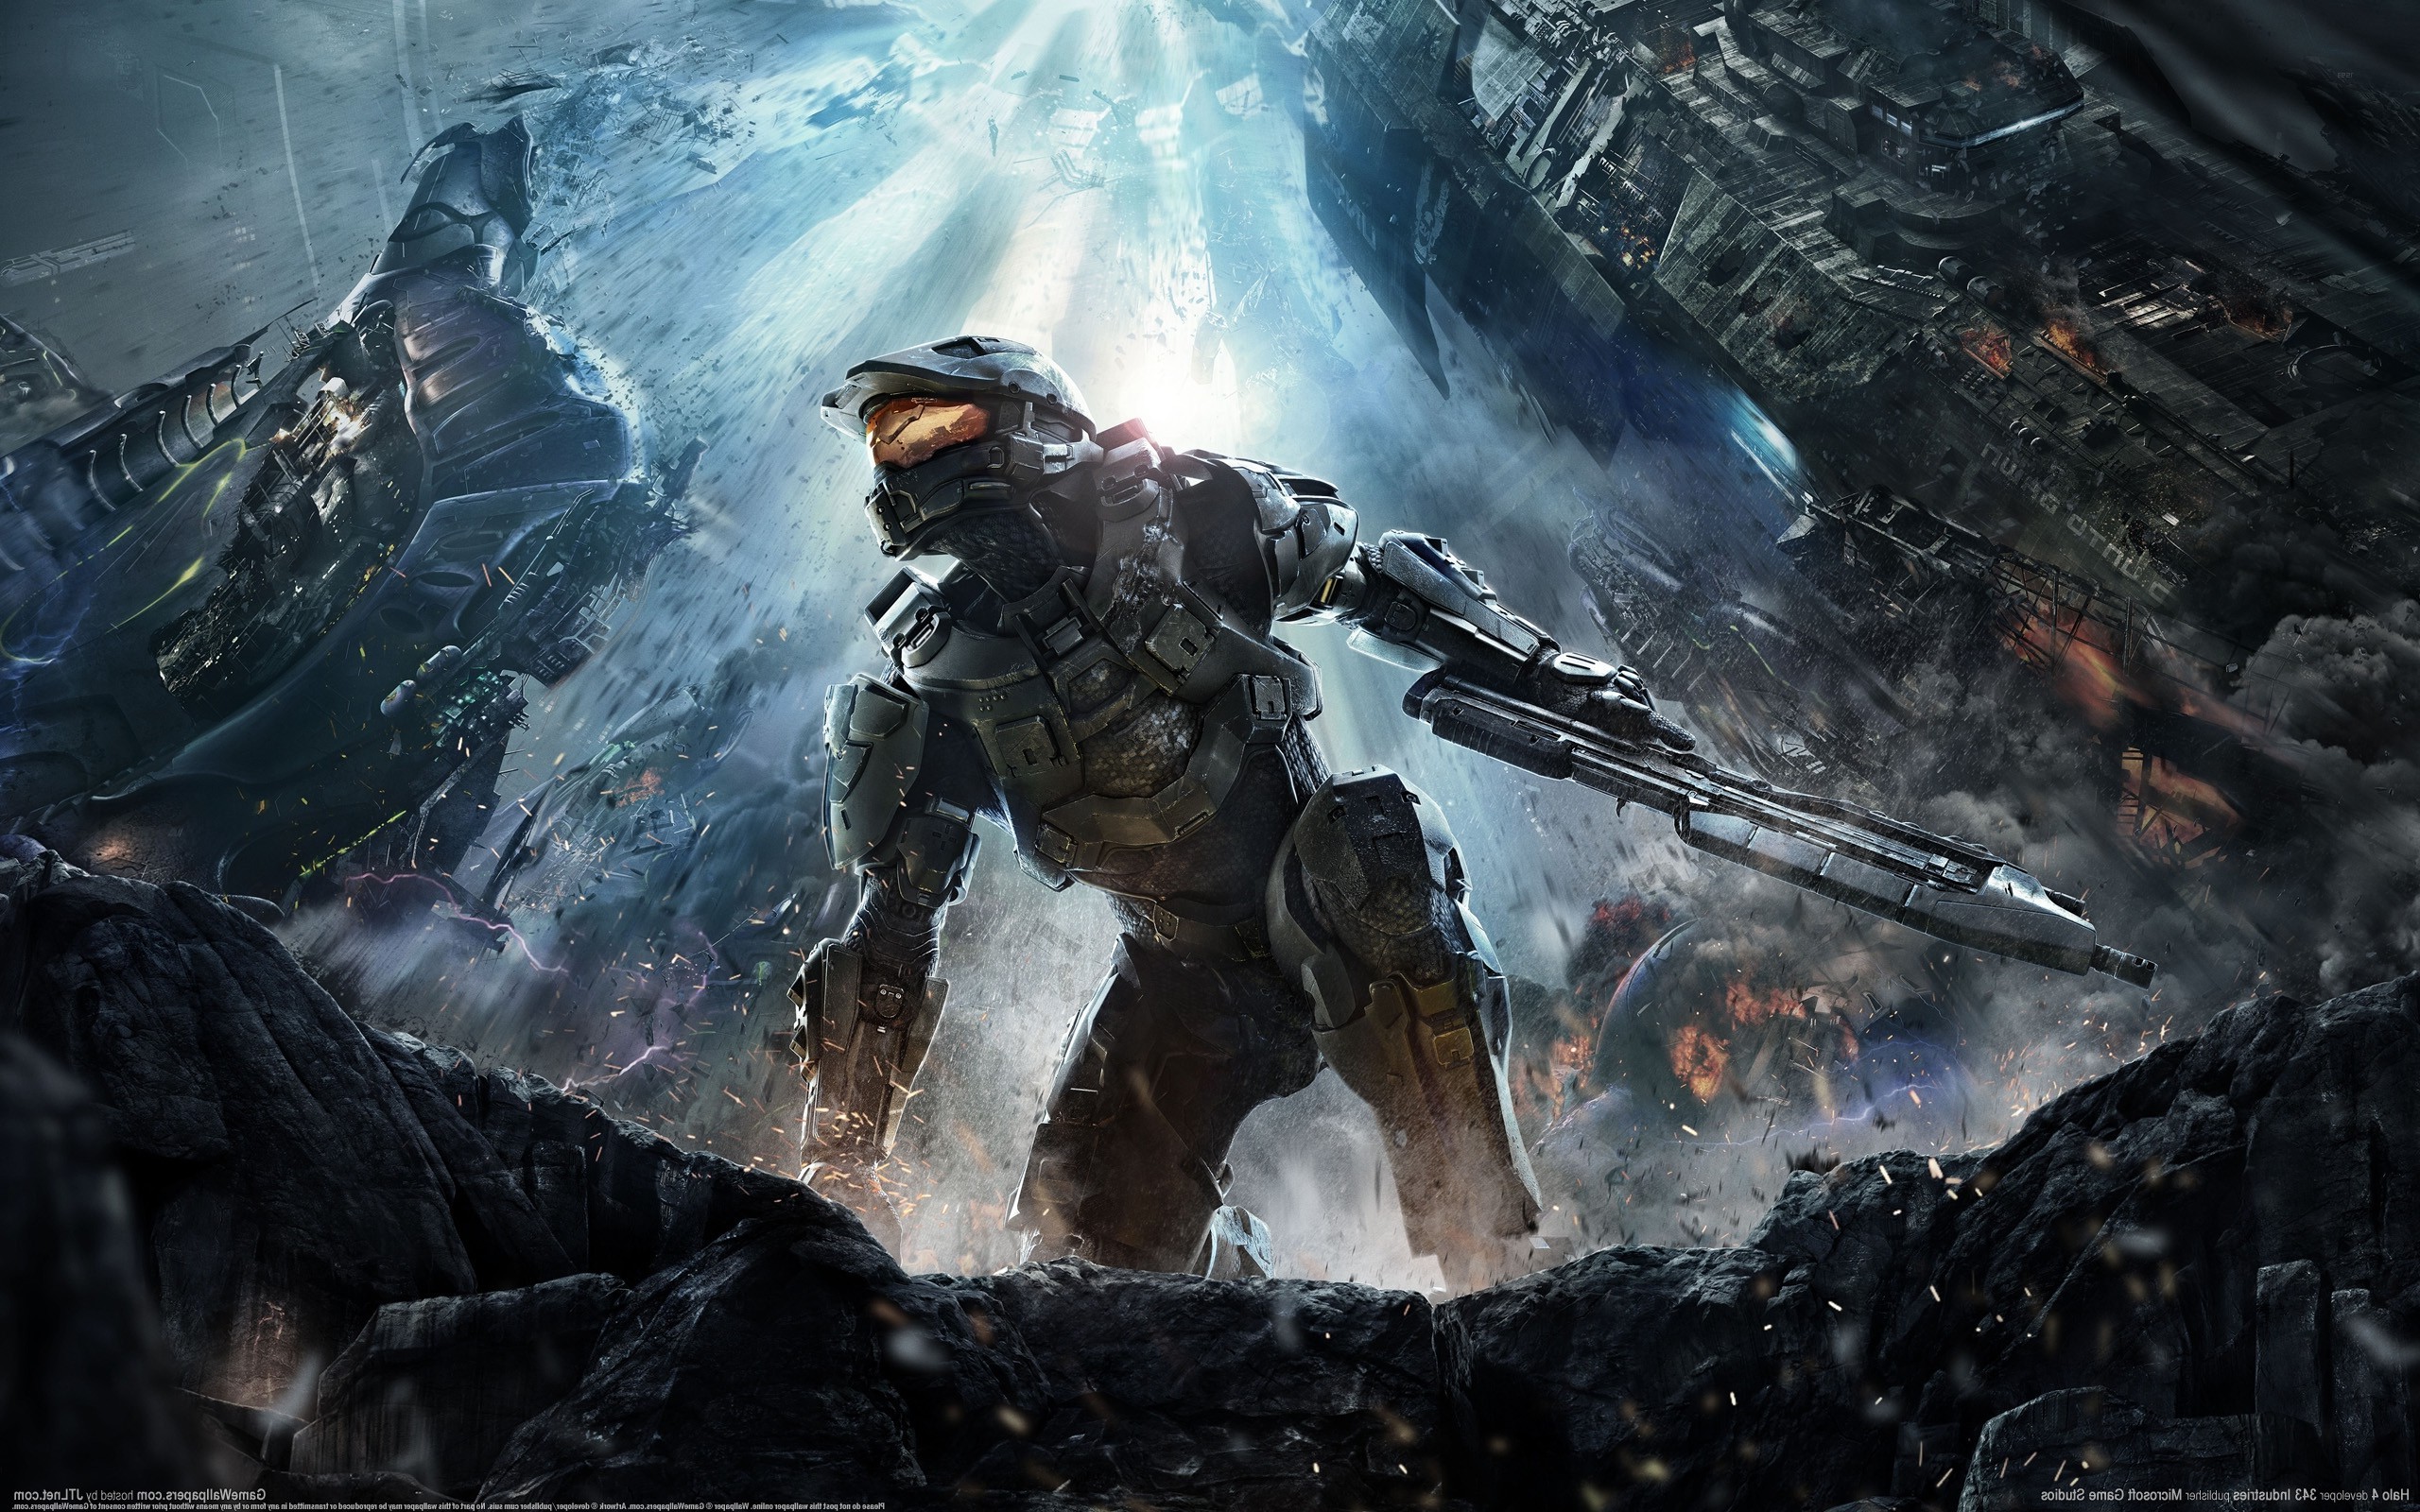 Ocean of Games Halo 4 Pc Games Free Download | Ocean of Games